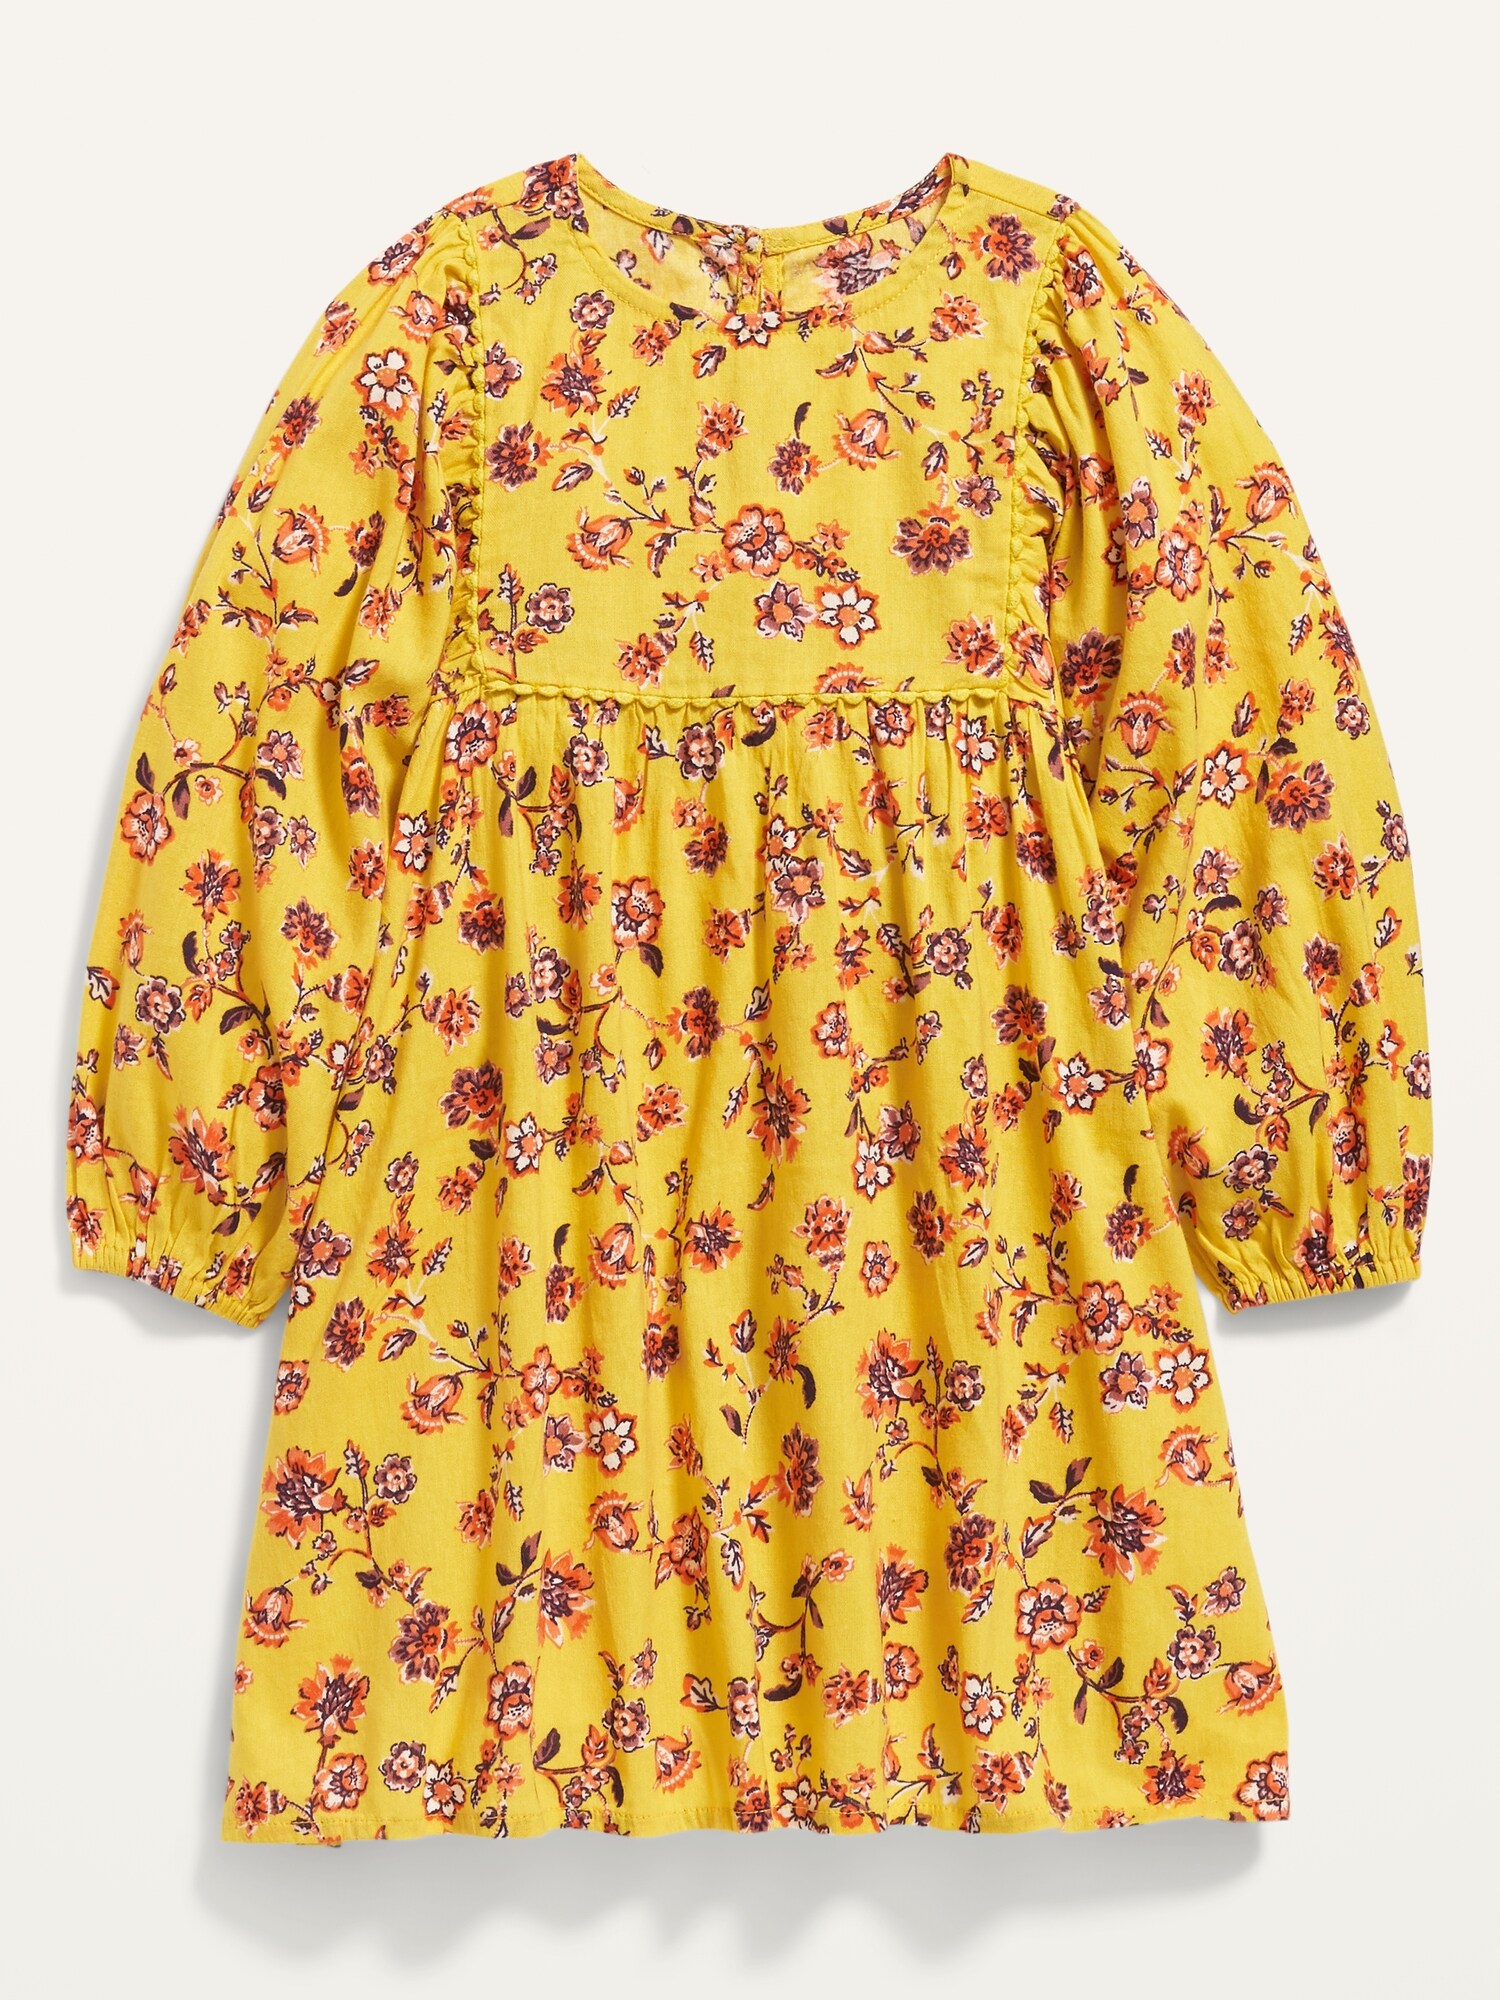 Fit & Flare Floral Dress for Toddler Girls | Old Navy